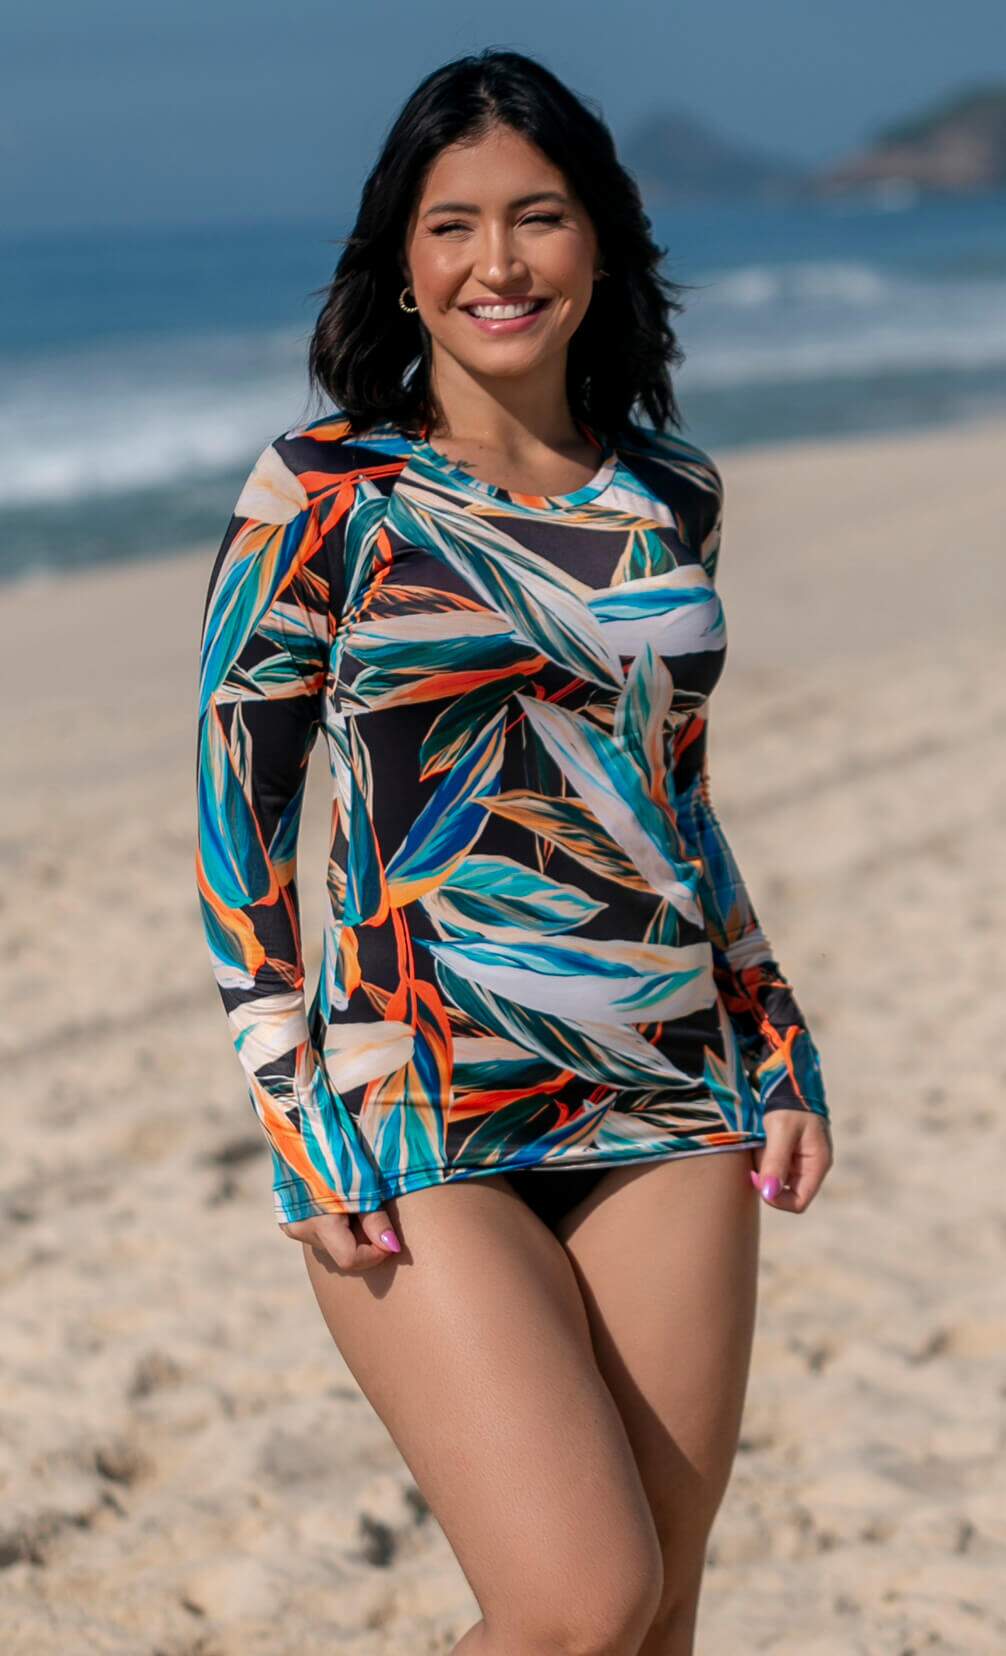 Comprar Camisa de Praia Feminina Estampada - a partir de R$49,90